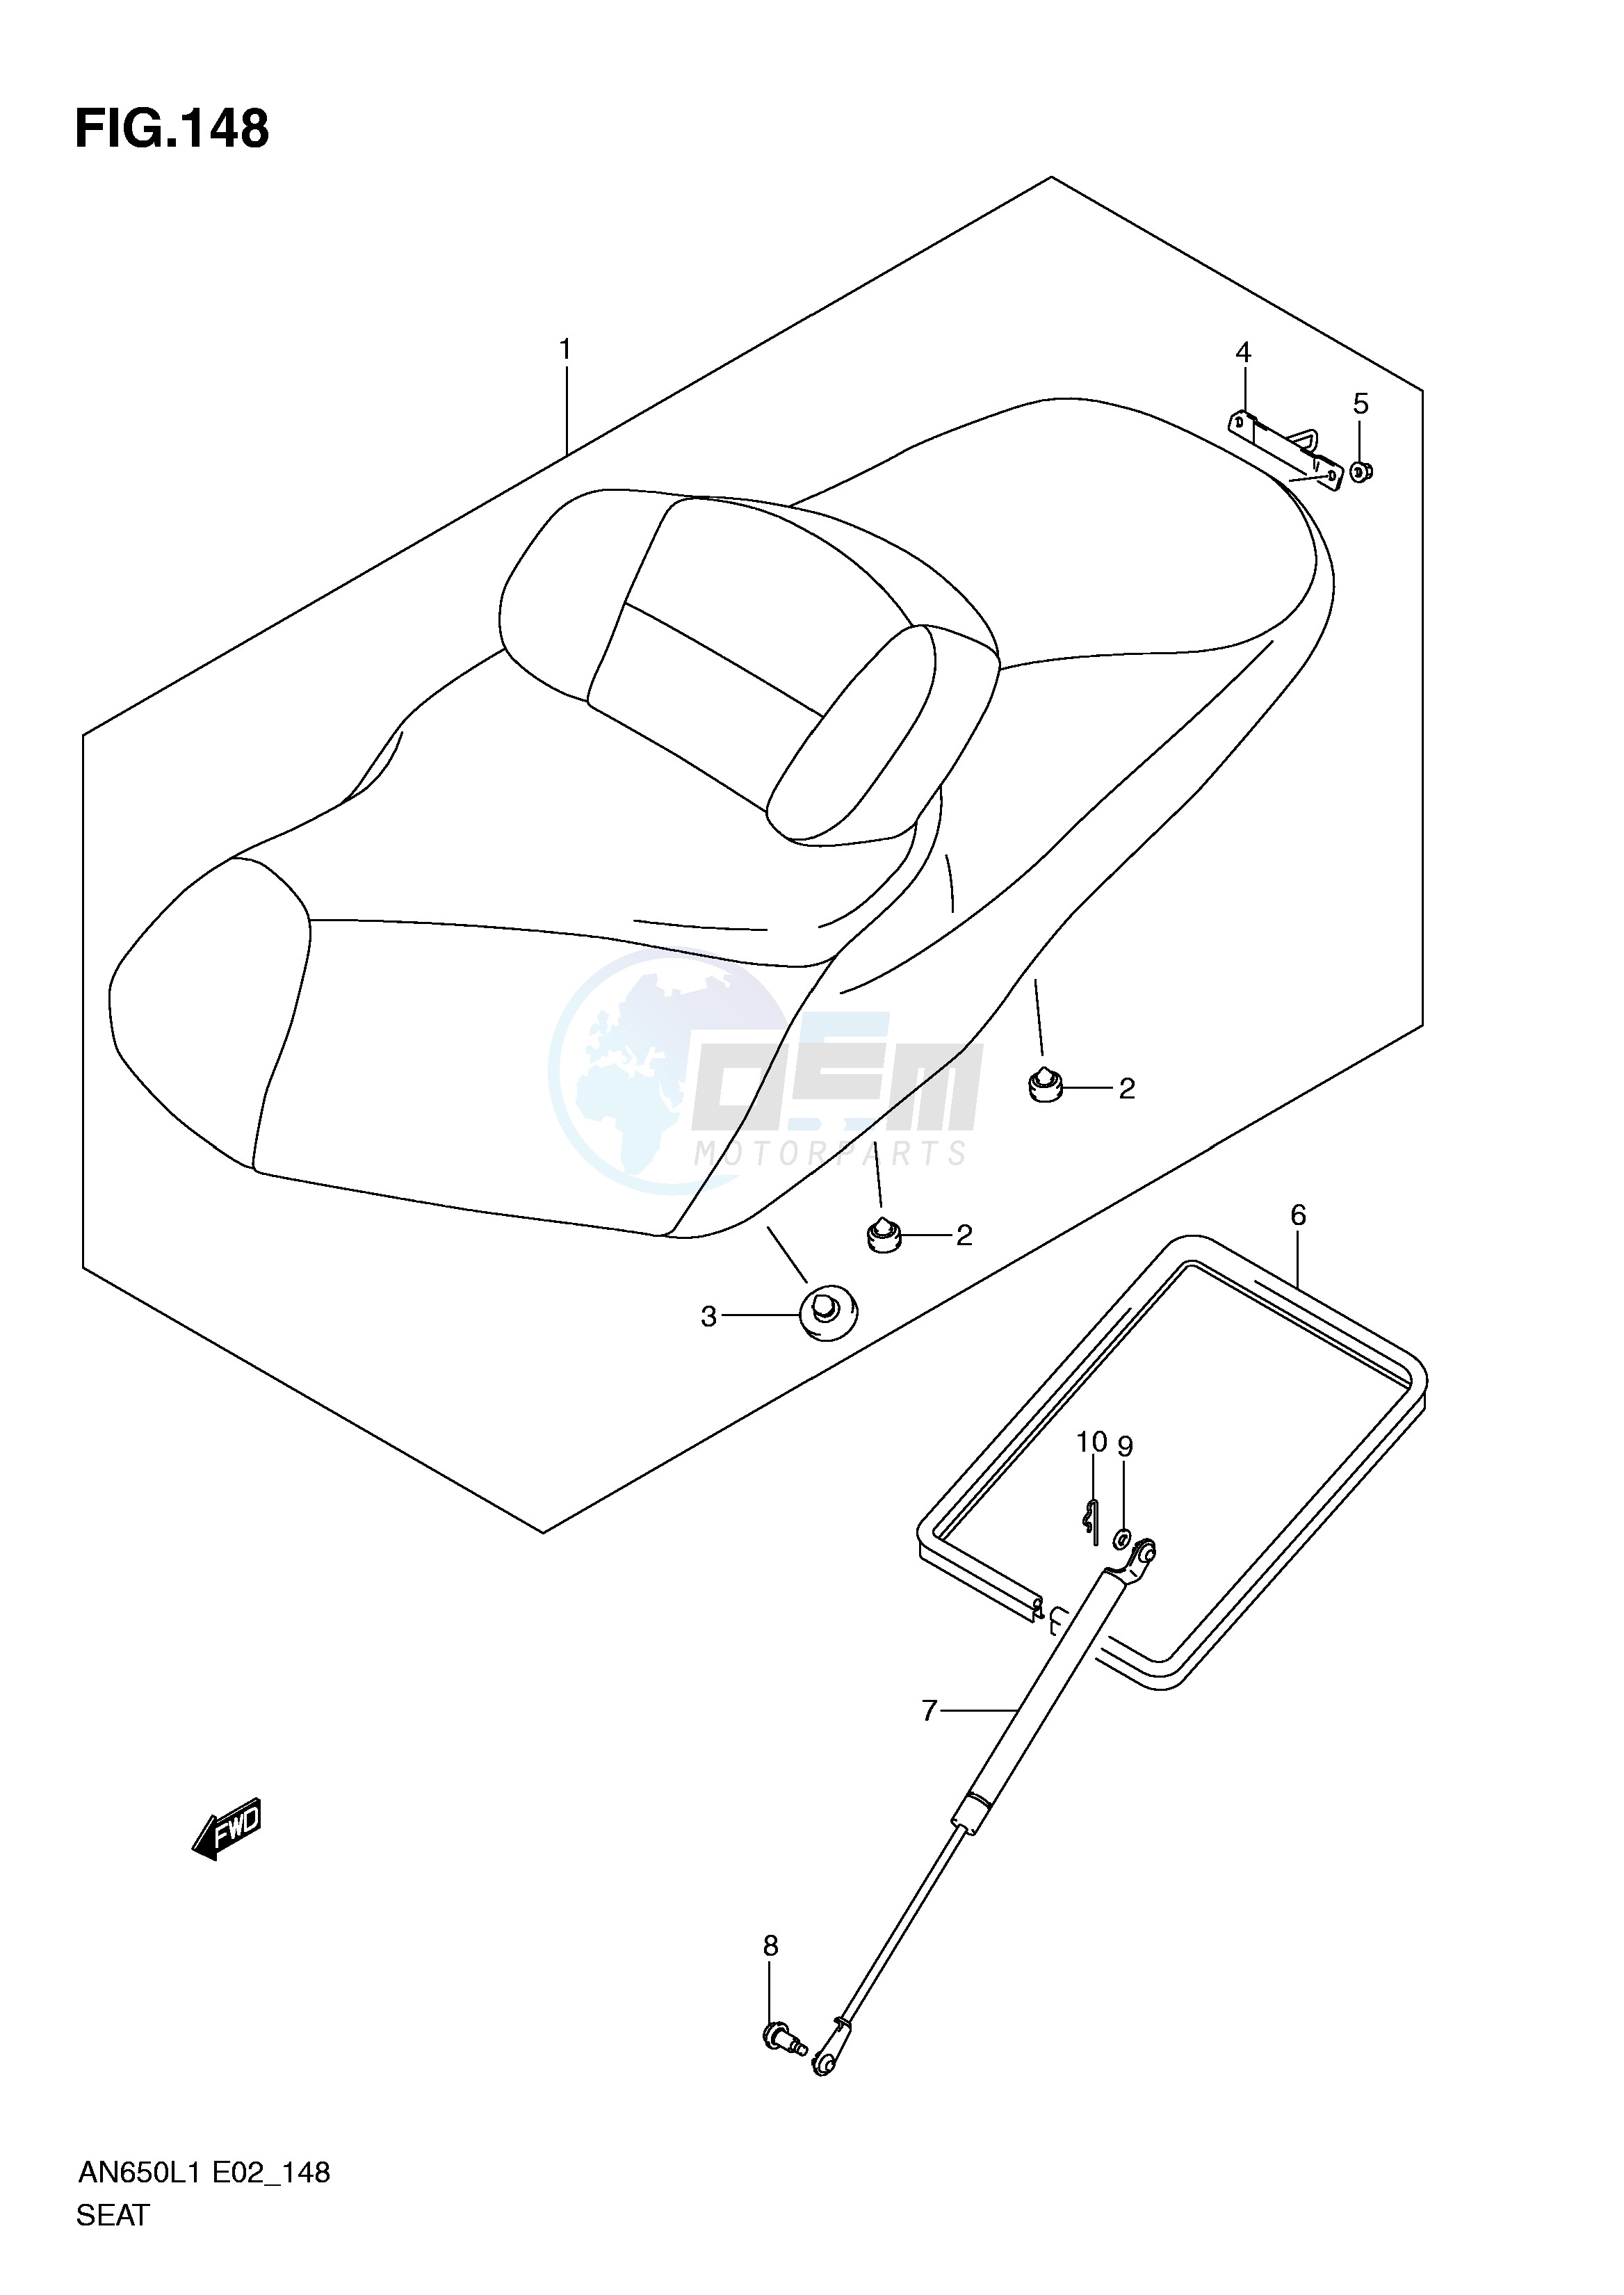 SEAT (AN650AL1 E51) blueprint